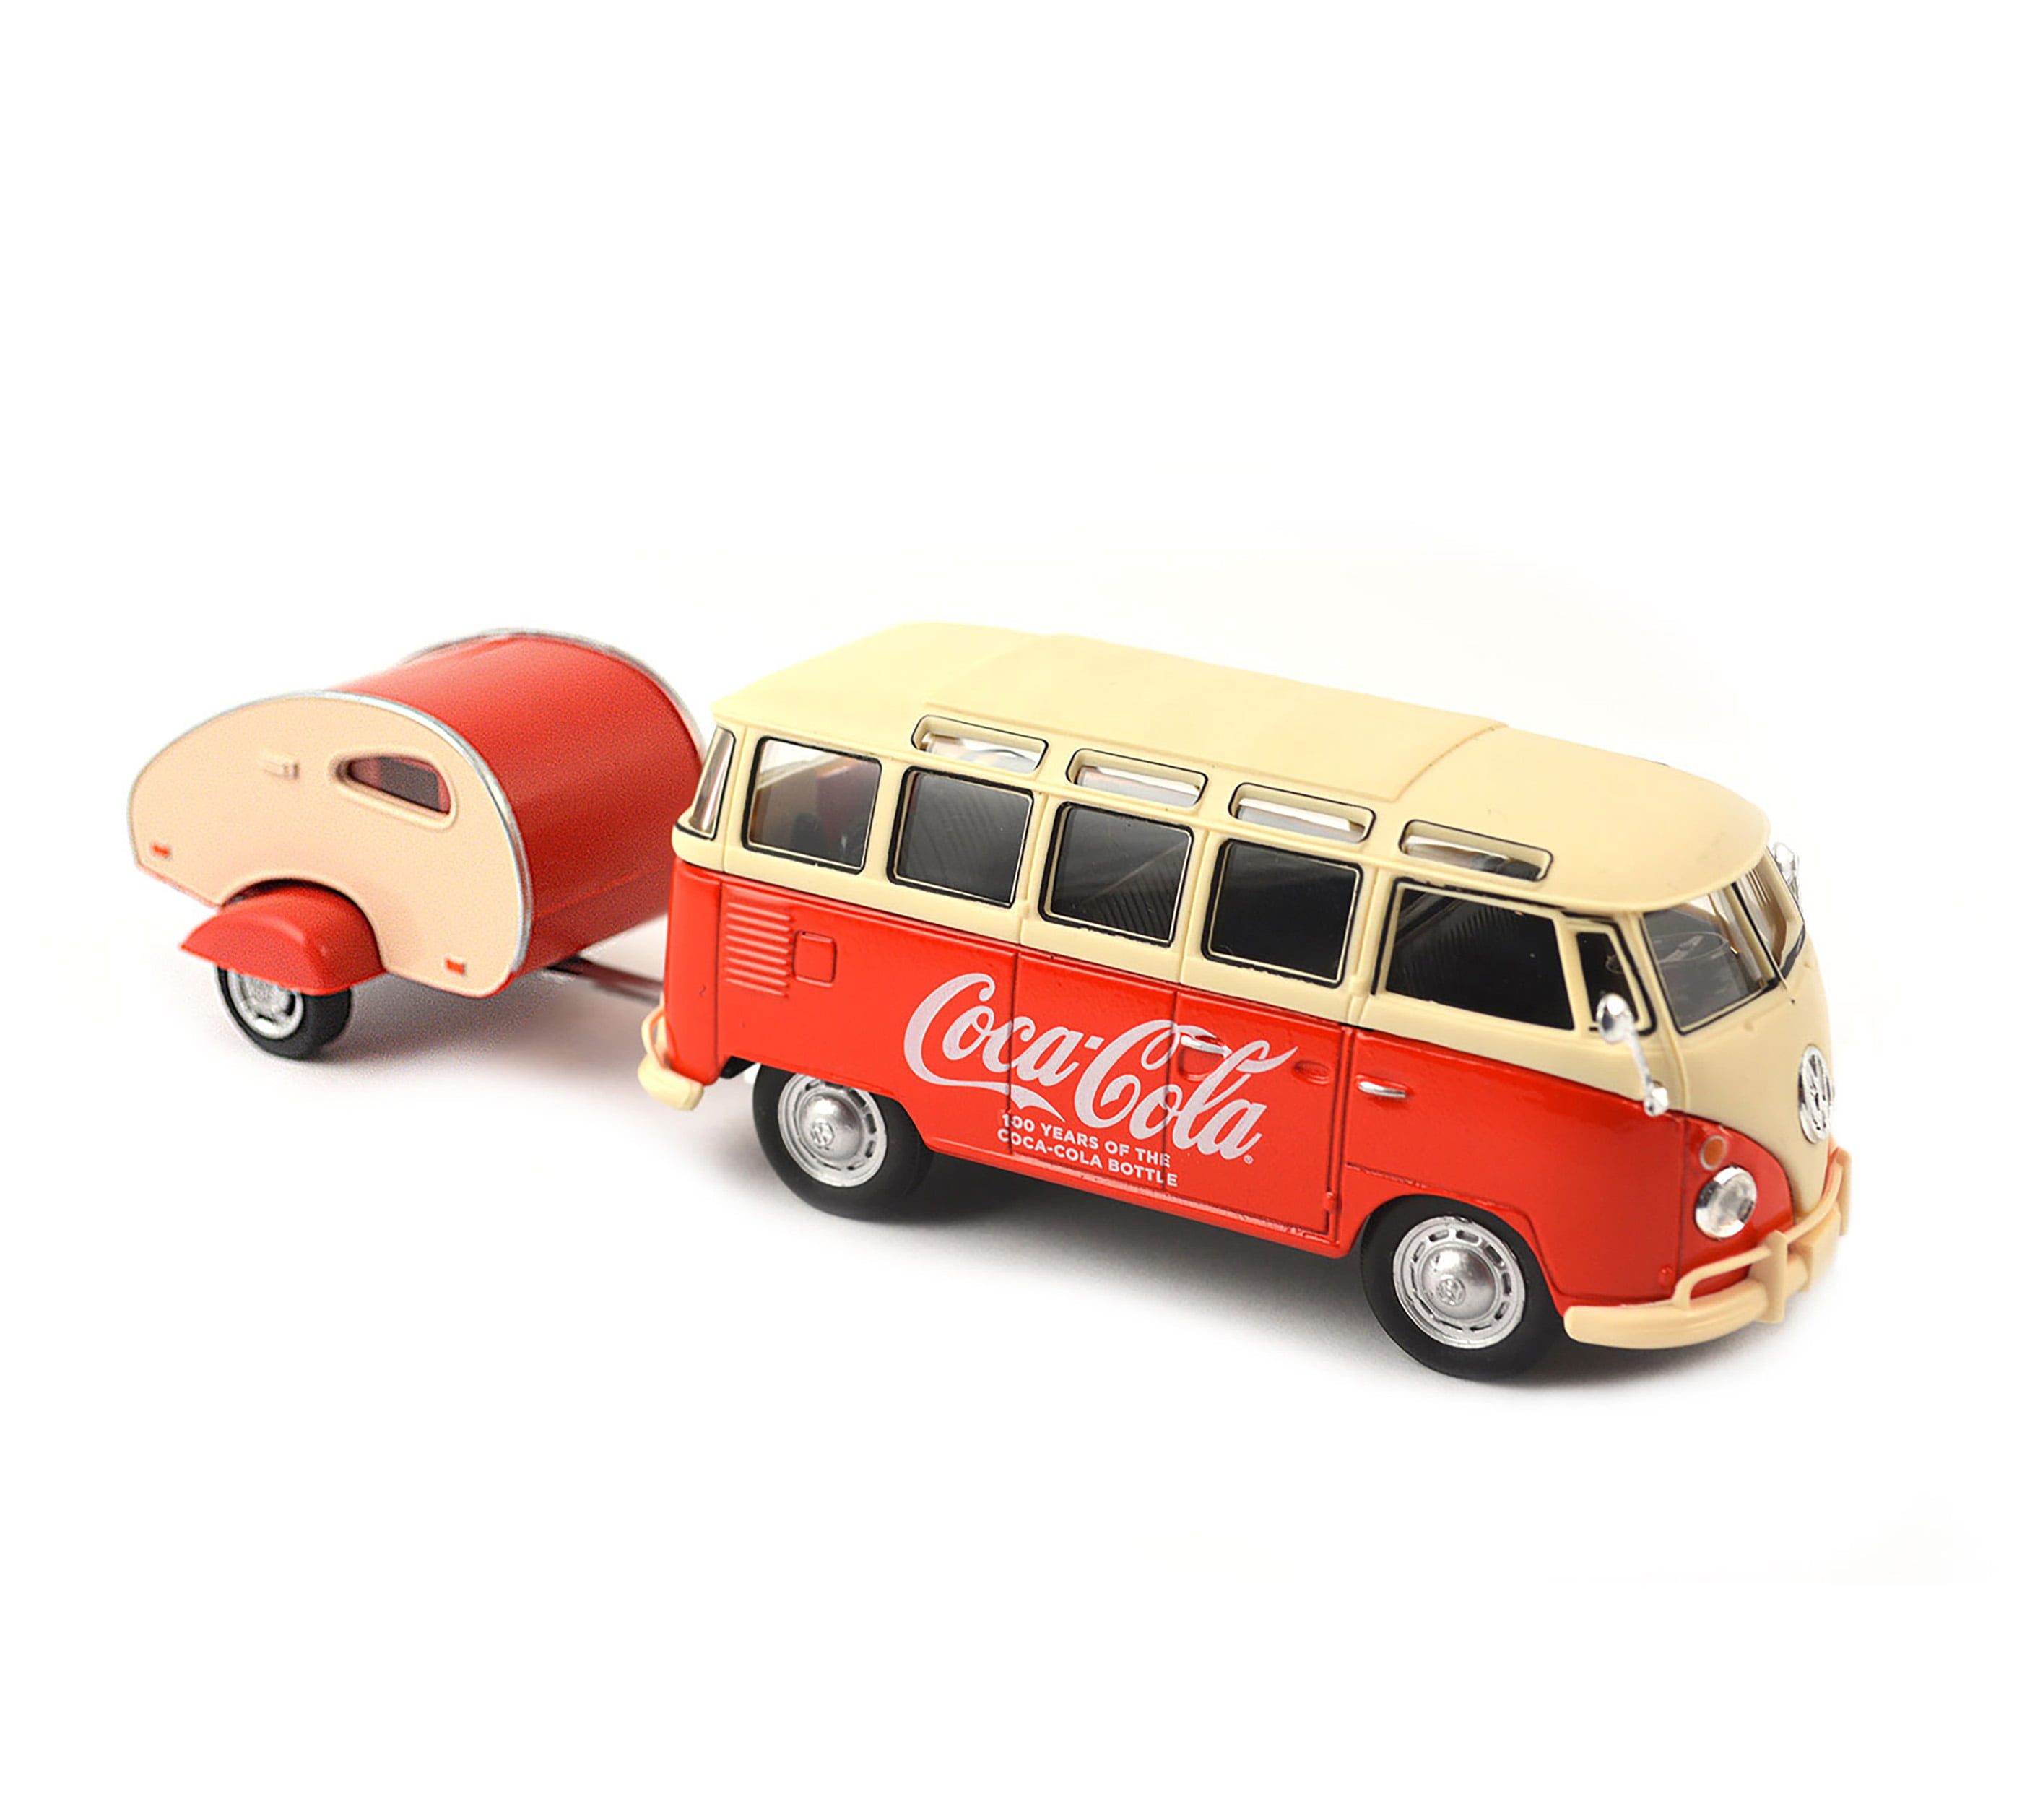 Coca-Cola 1962 VW Volkswagen Bus w Trailer Diecast 1:43 Motor City 5 inch 440033 